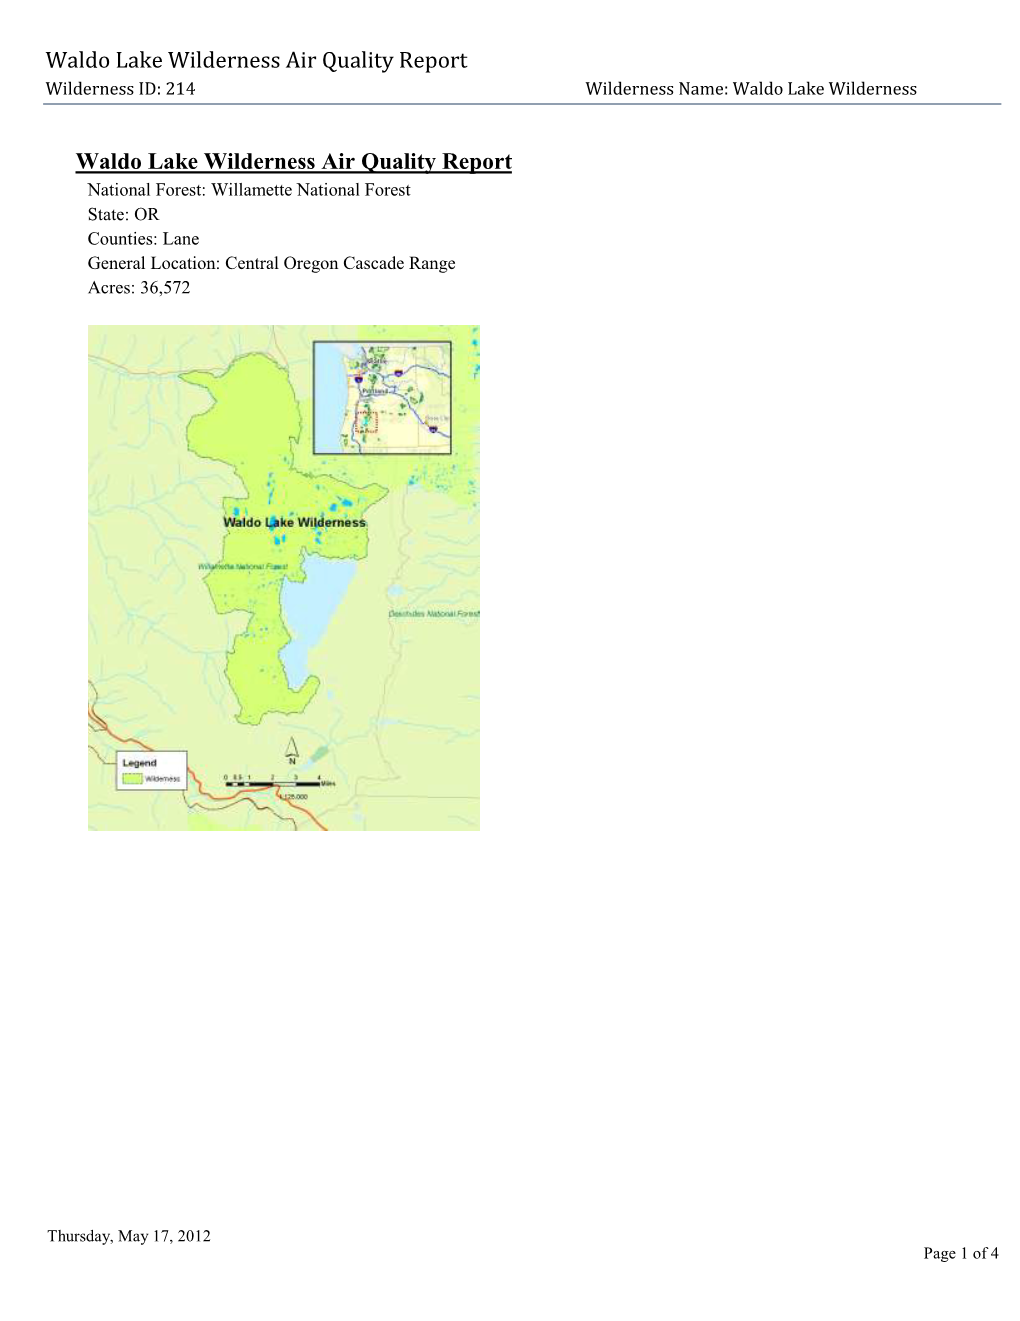 Waldo Lake Wilderness Air Quality Report, 2012